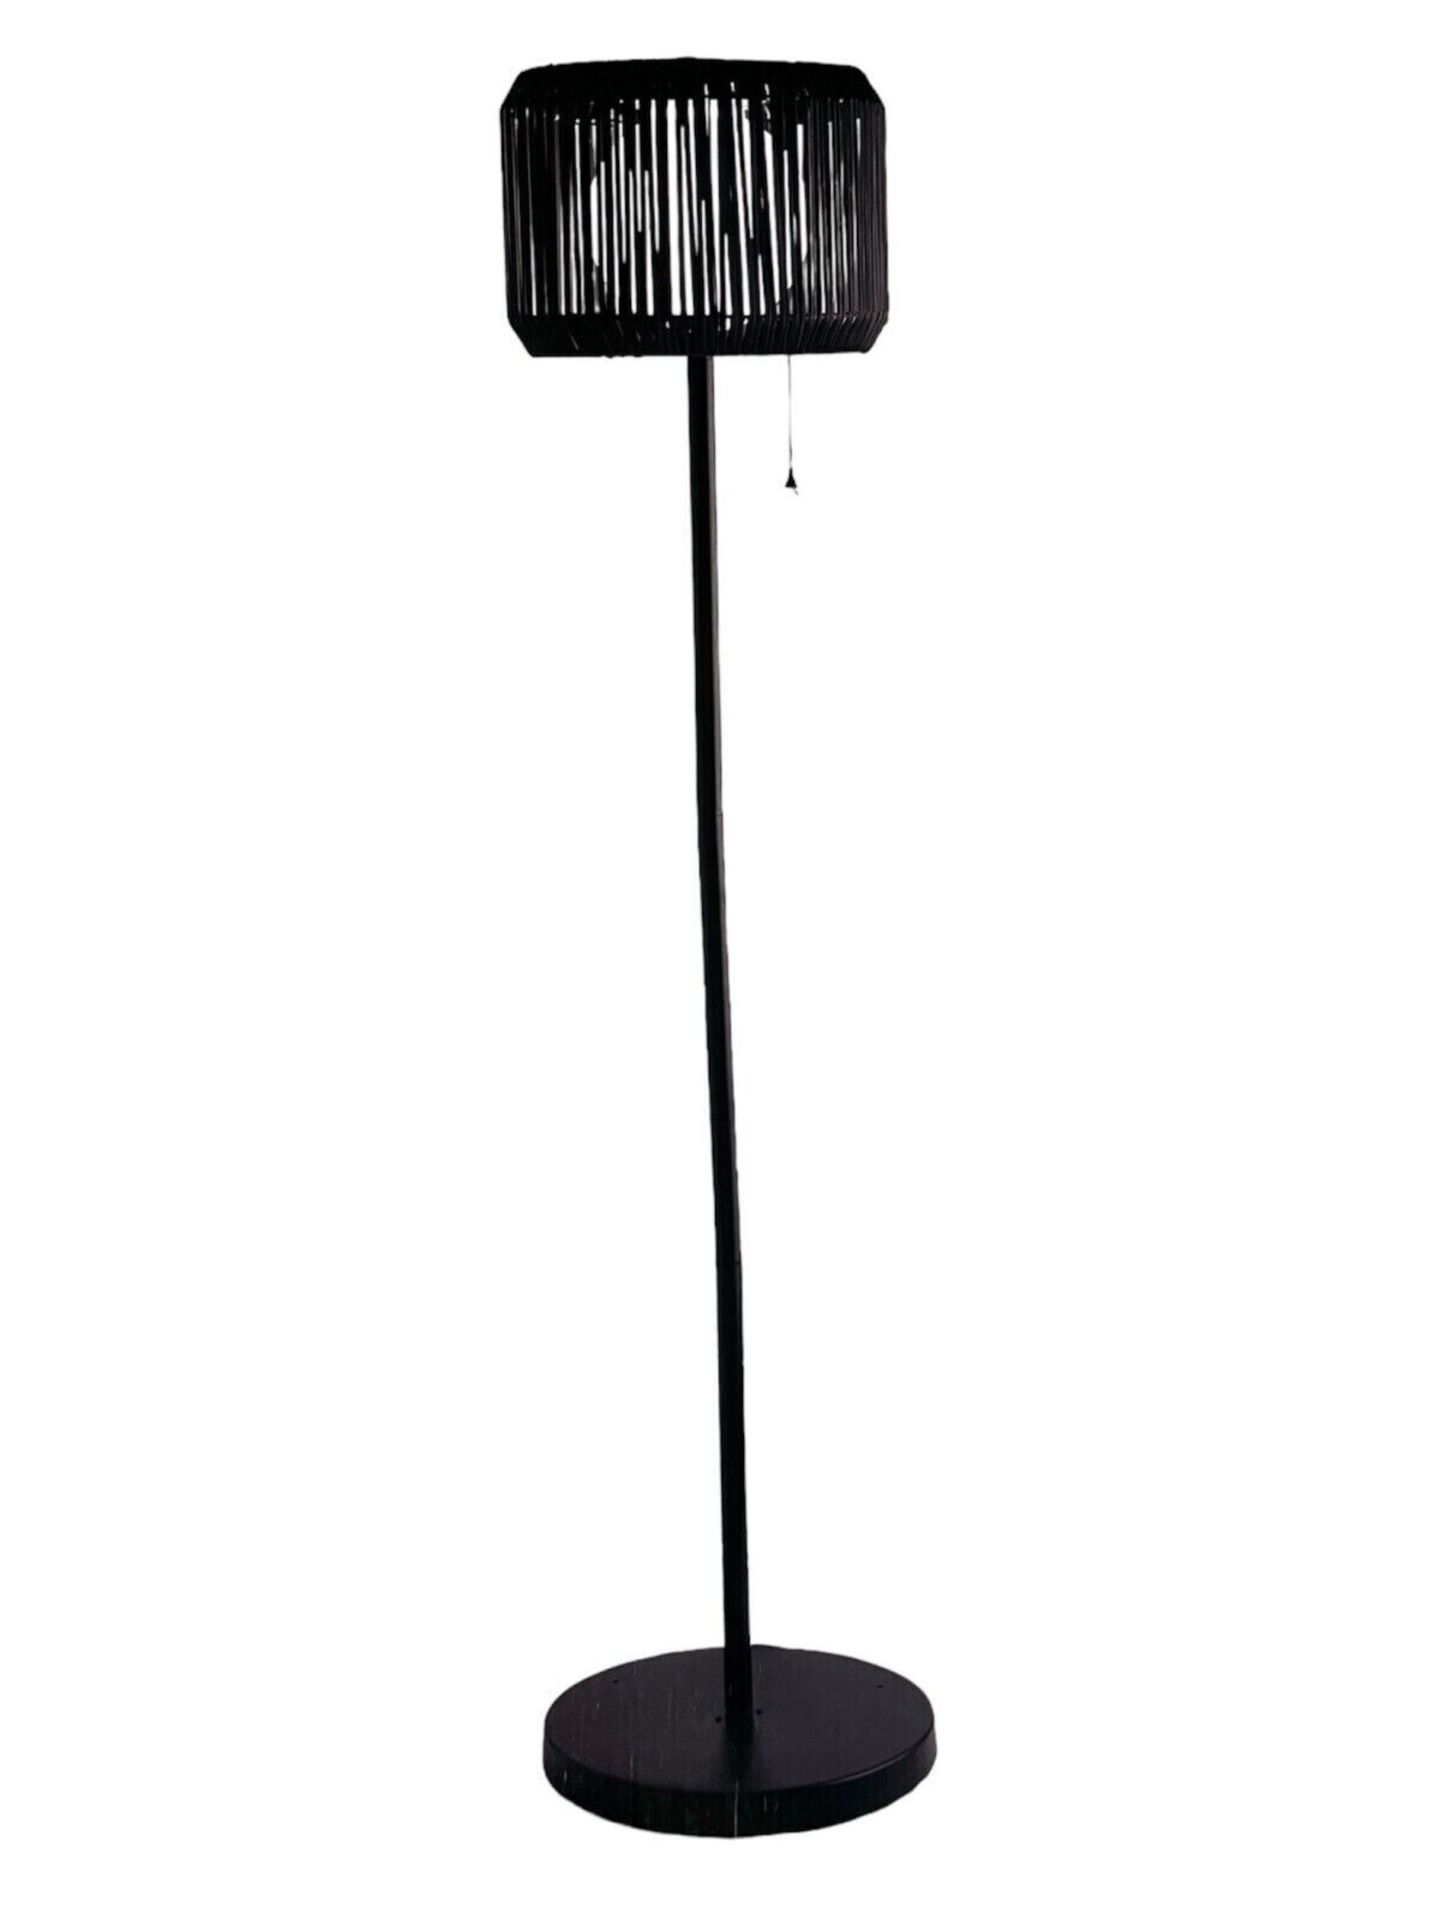 12 X HABITAT TALL OUTDOOR ROPE SOLAR FLOOR LAMP BLACK, BRAND NEW